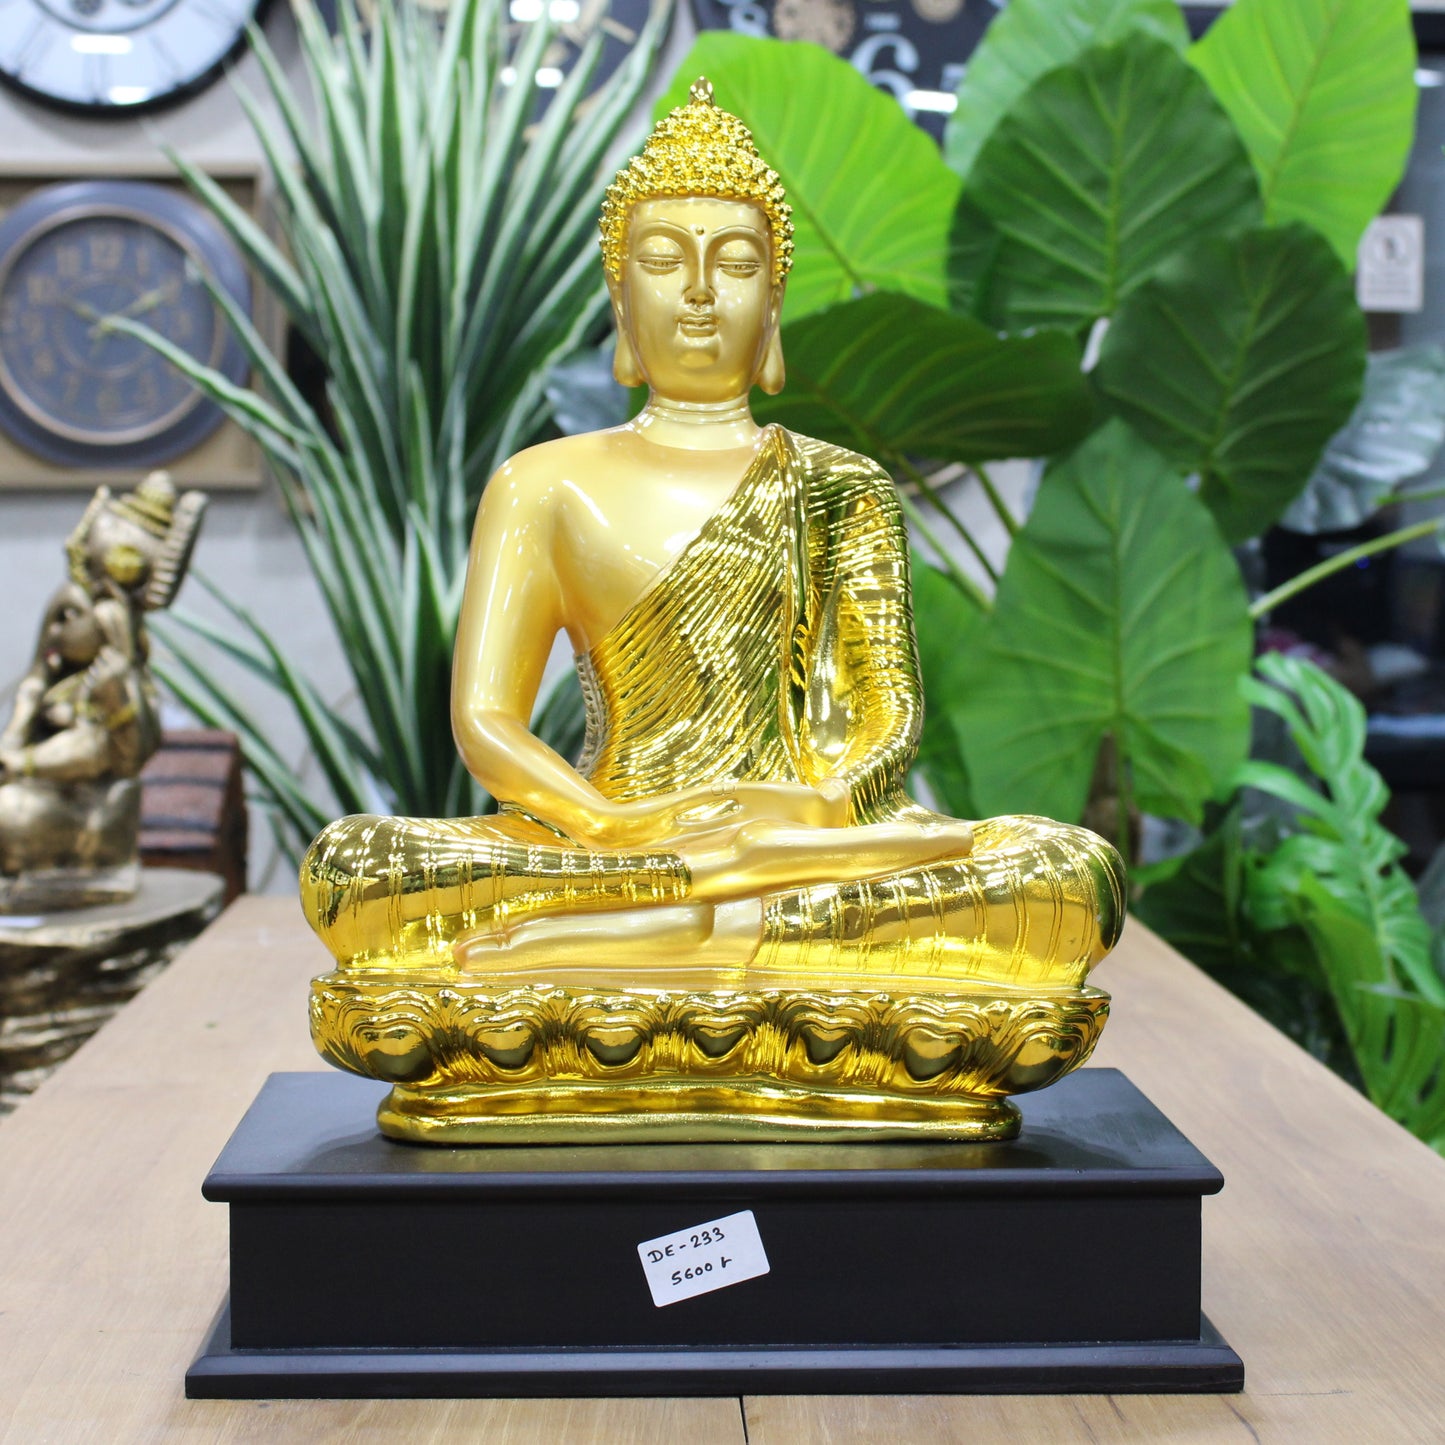 Euroxo Golden Buddha Idol in Dhyan Mudra